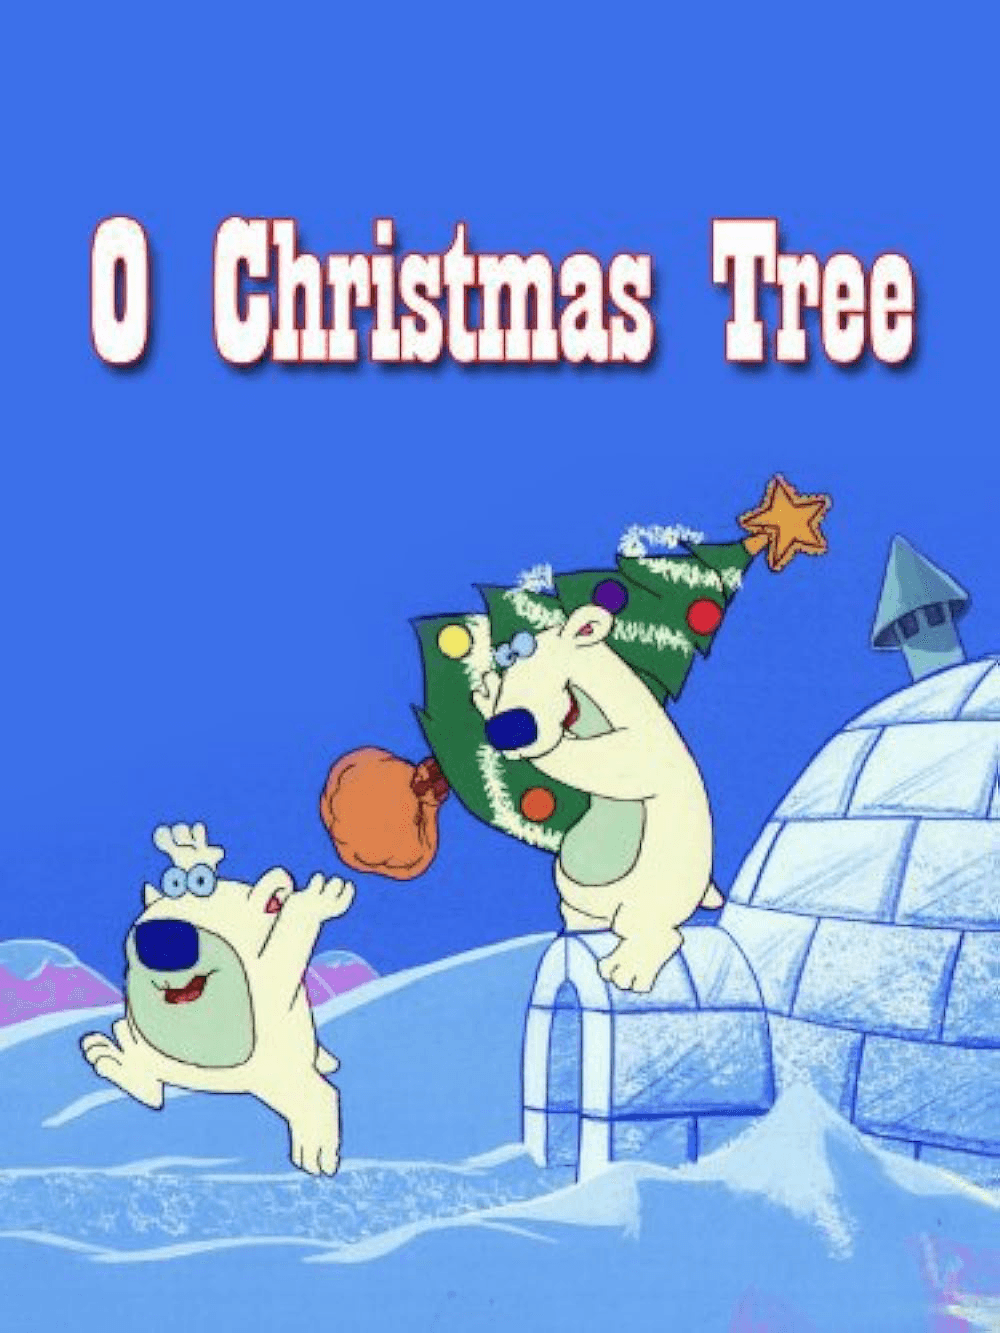 O' Christmas Tree logo